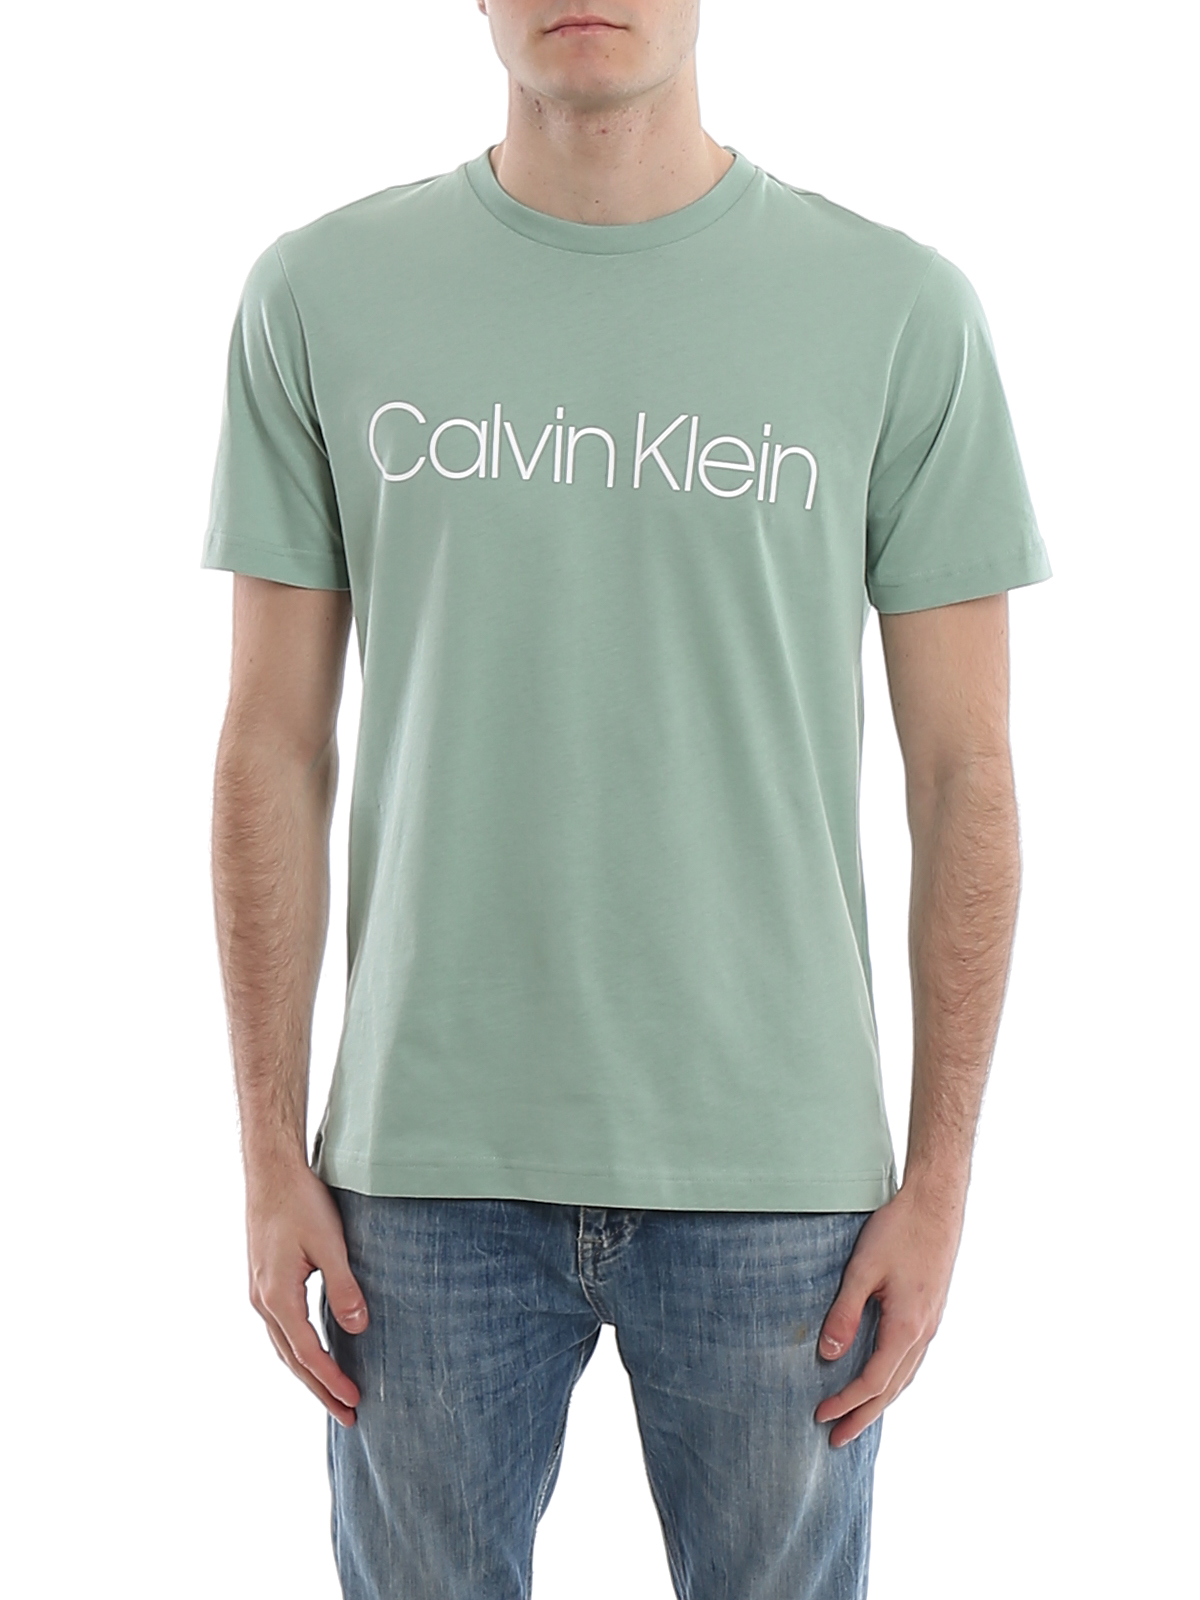 calvin klein original t shirt